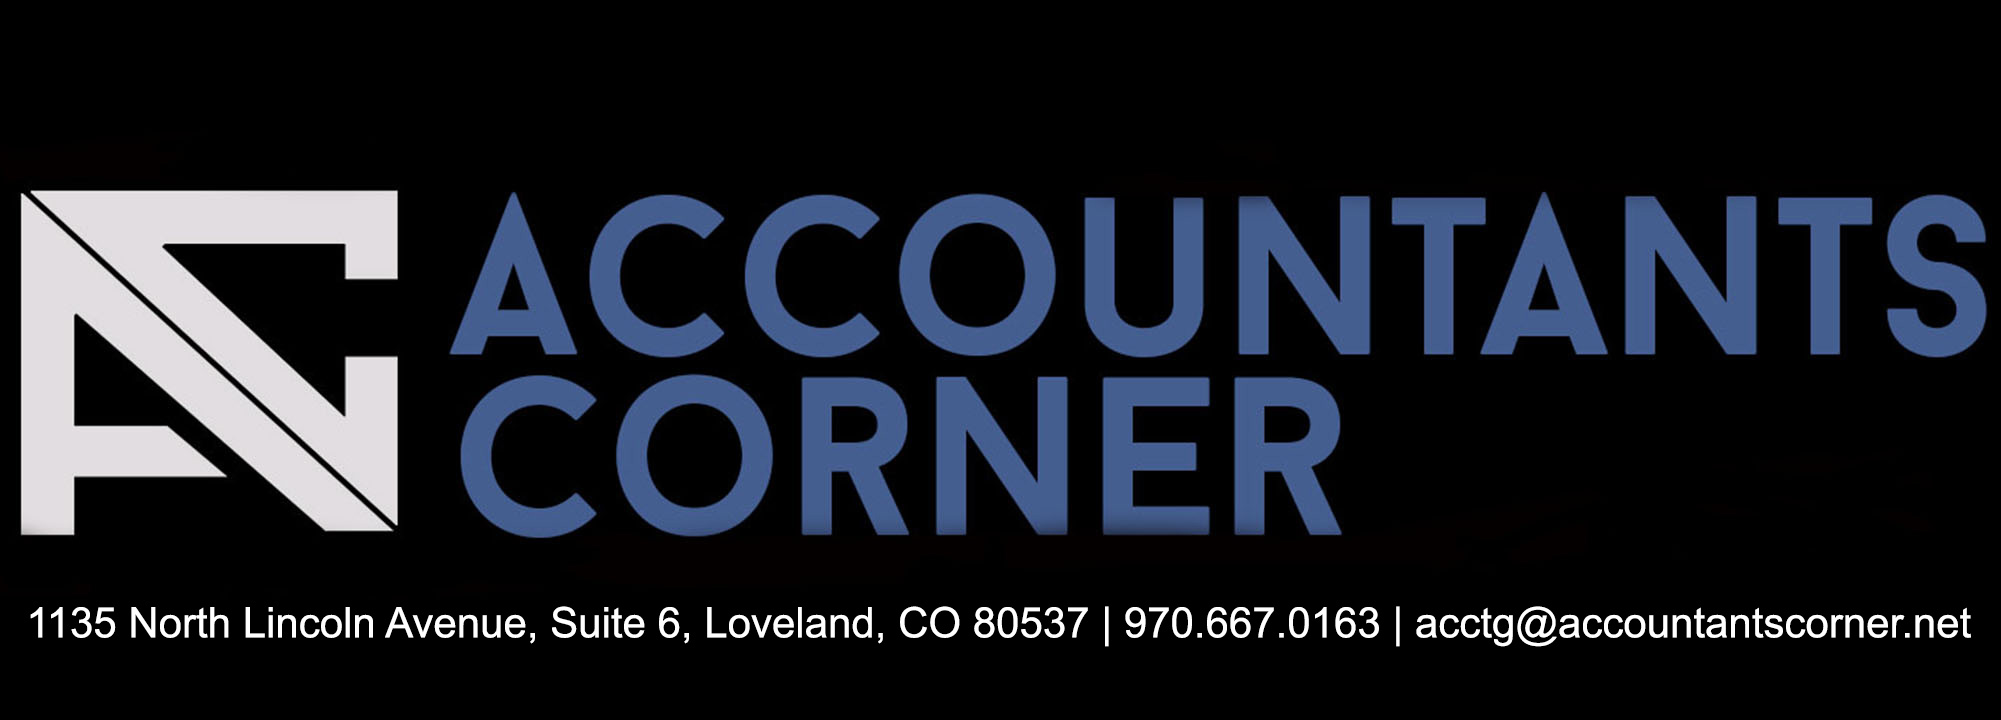 Accountants Corner